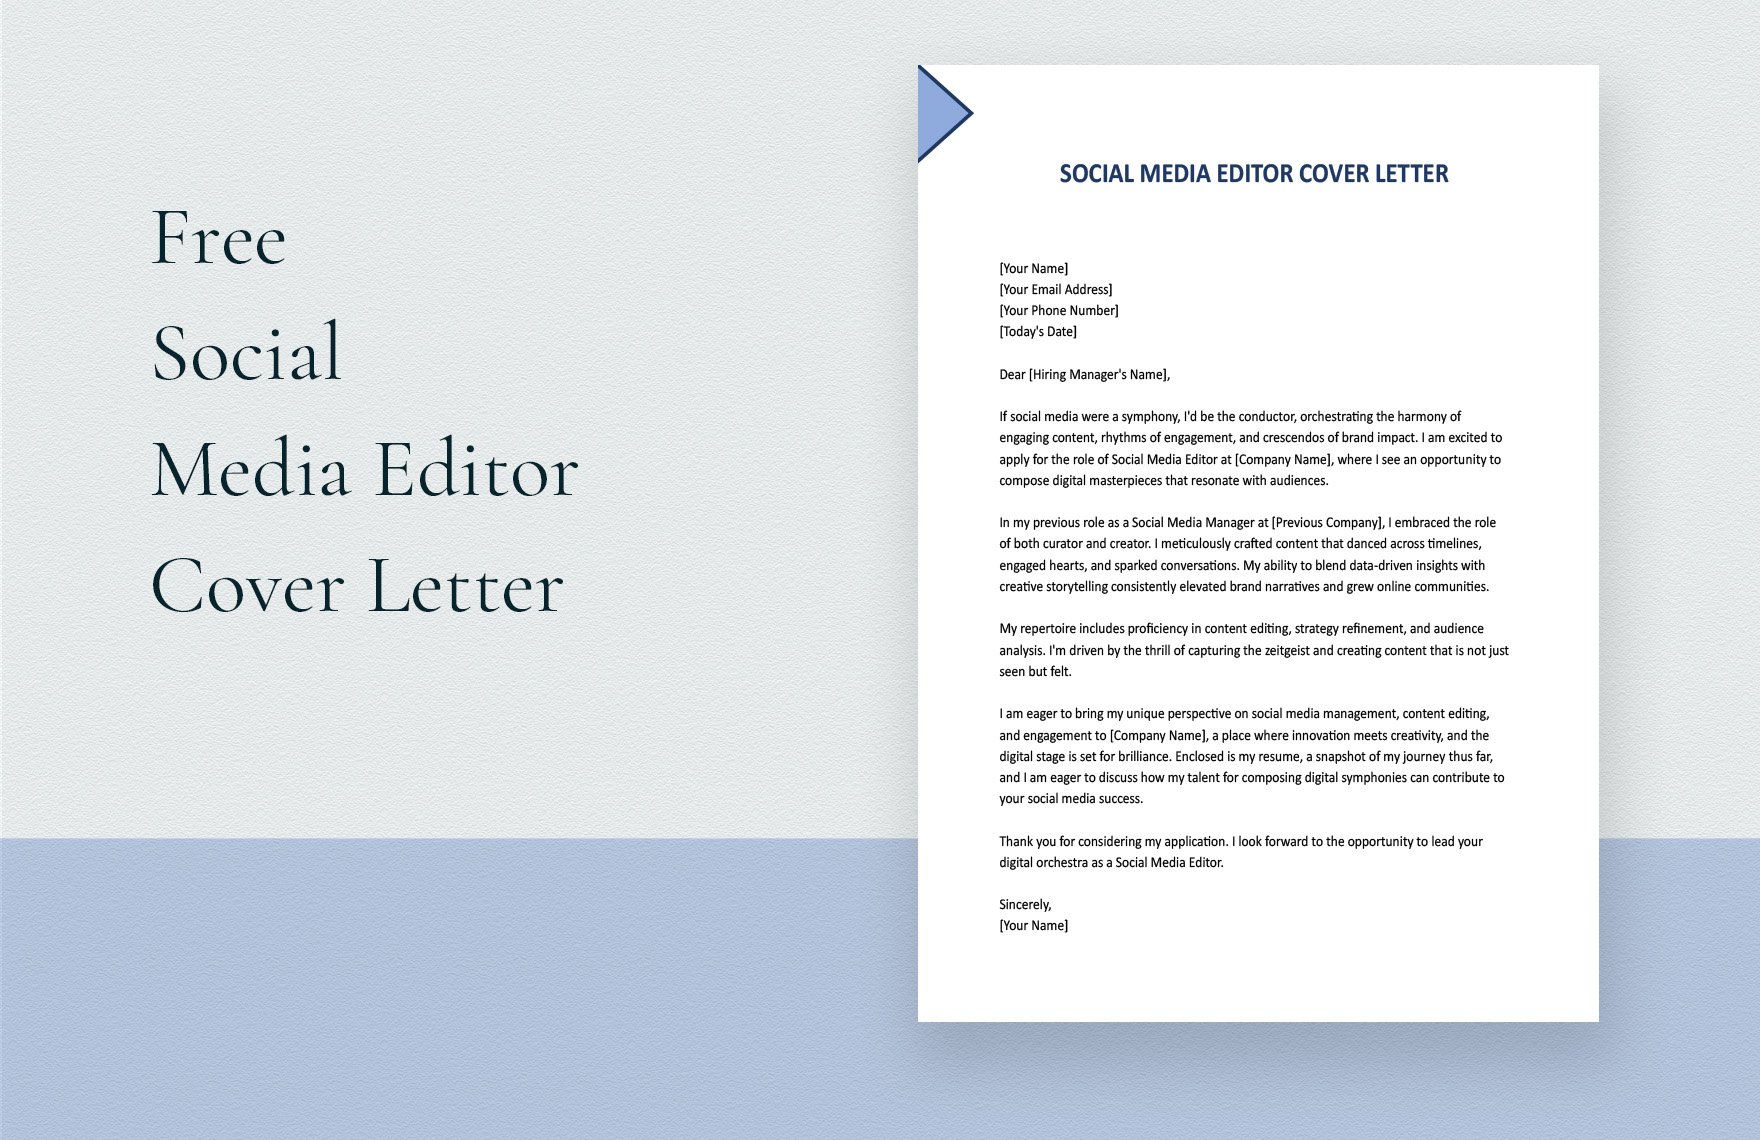 Social Media Editor Cover Letter in Word, Google Docs